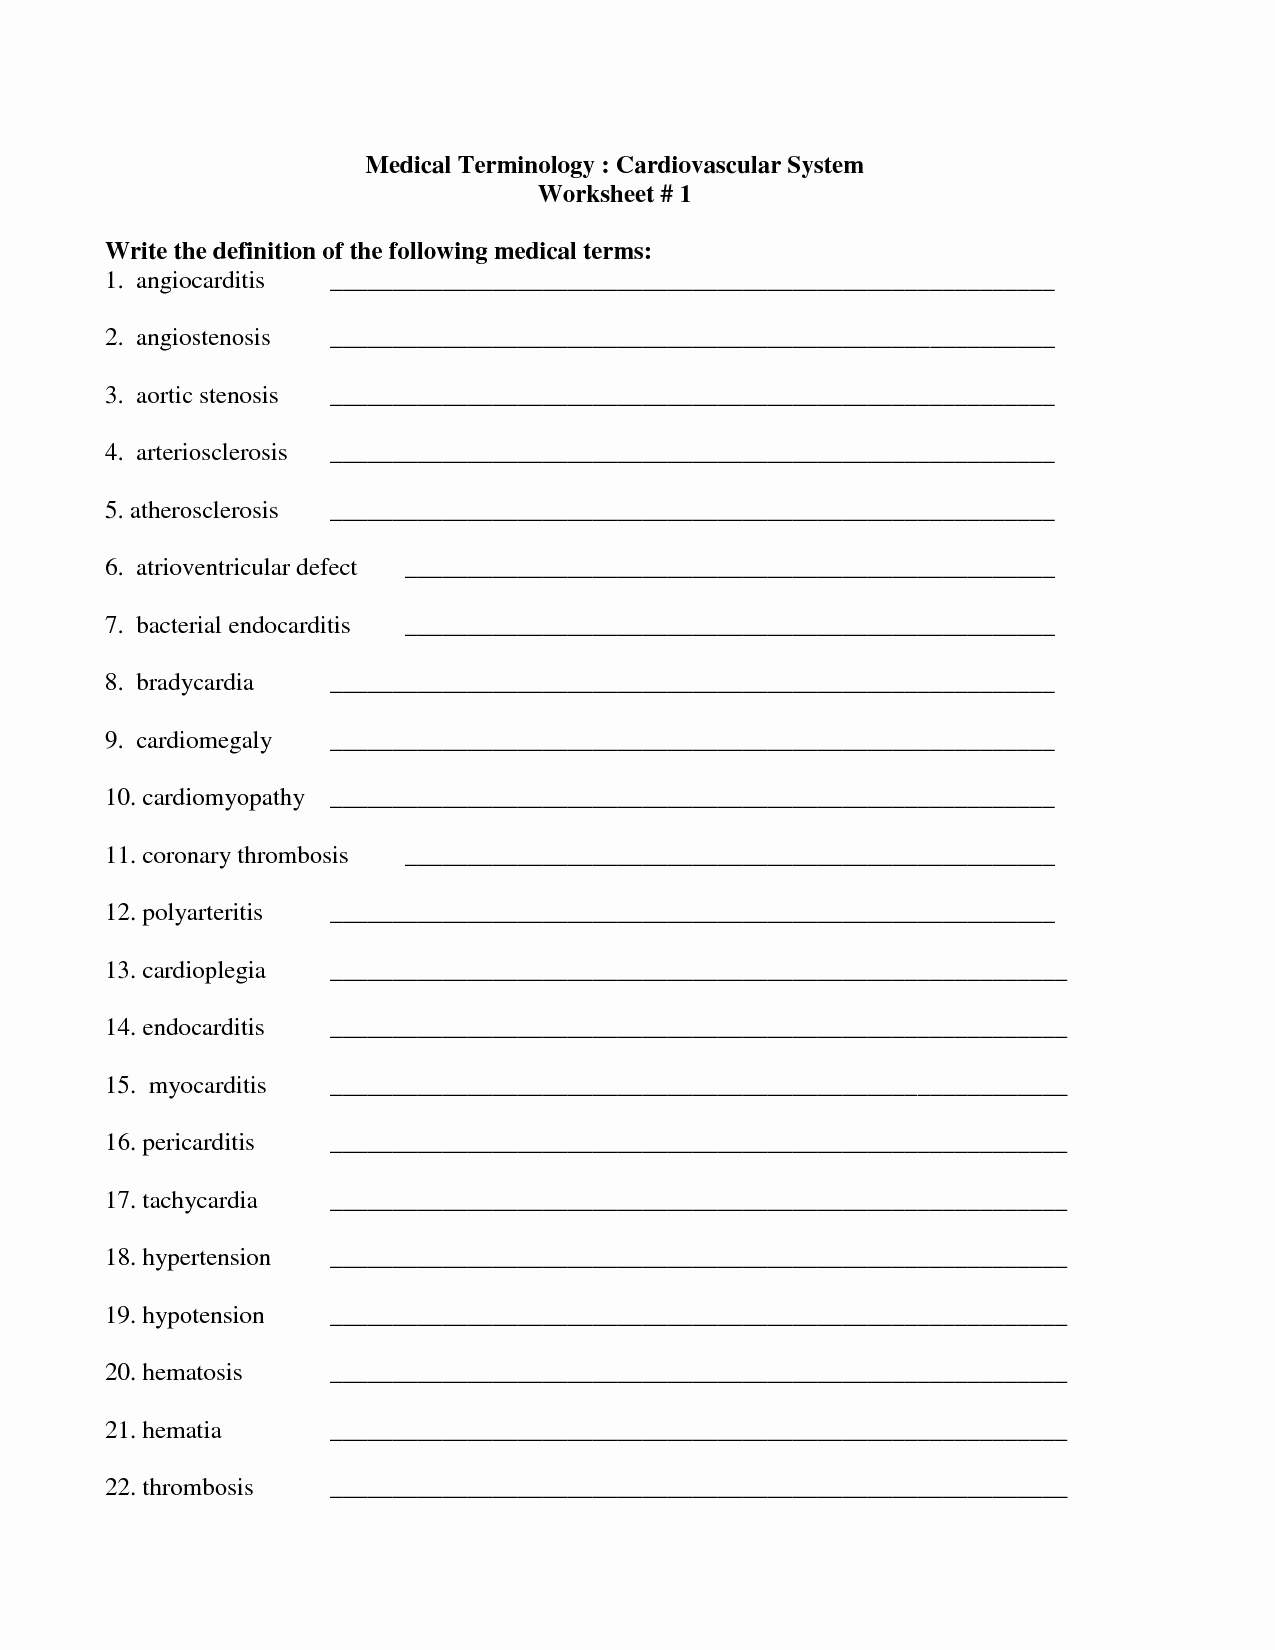 50 Medical Terminology Abbreviations Worksheet